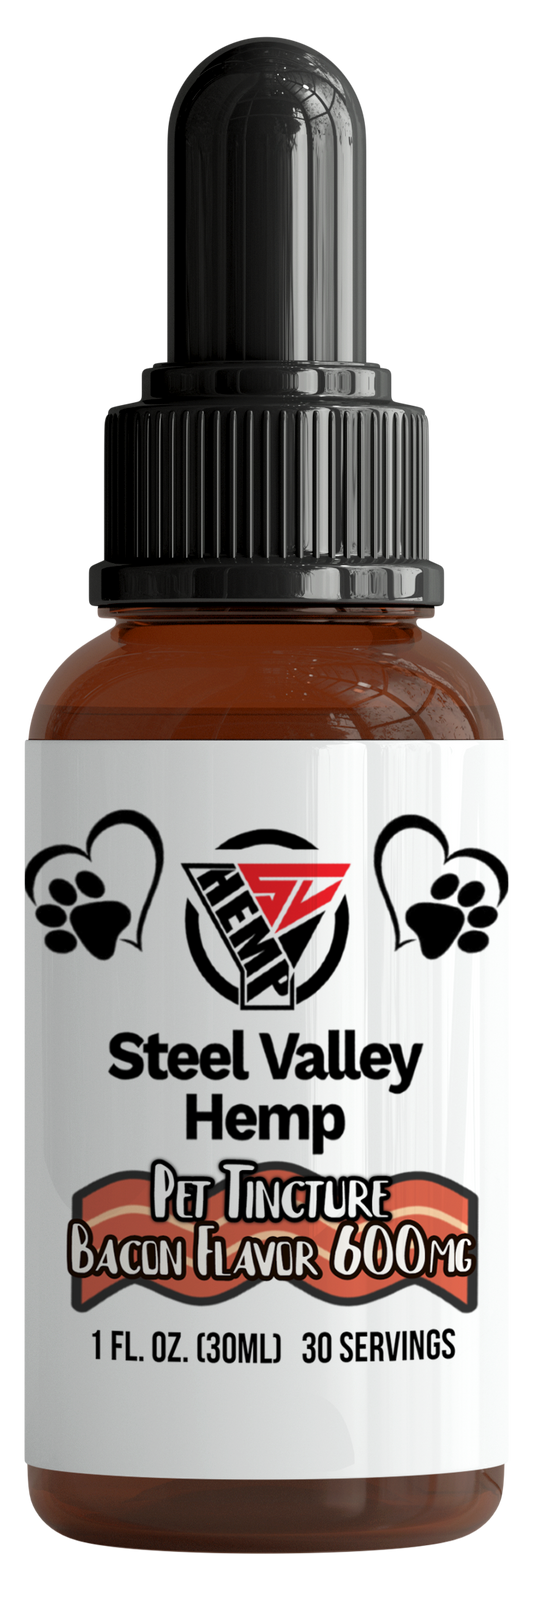 Steel Valley Hemp Full Spectrum Tincture Oil Pets 600 Bacon Flavor